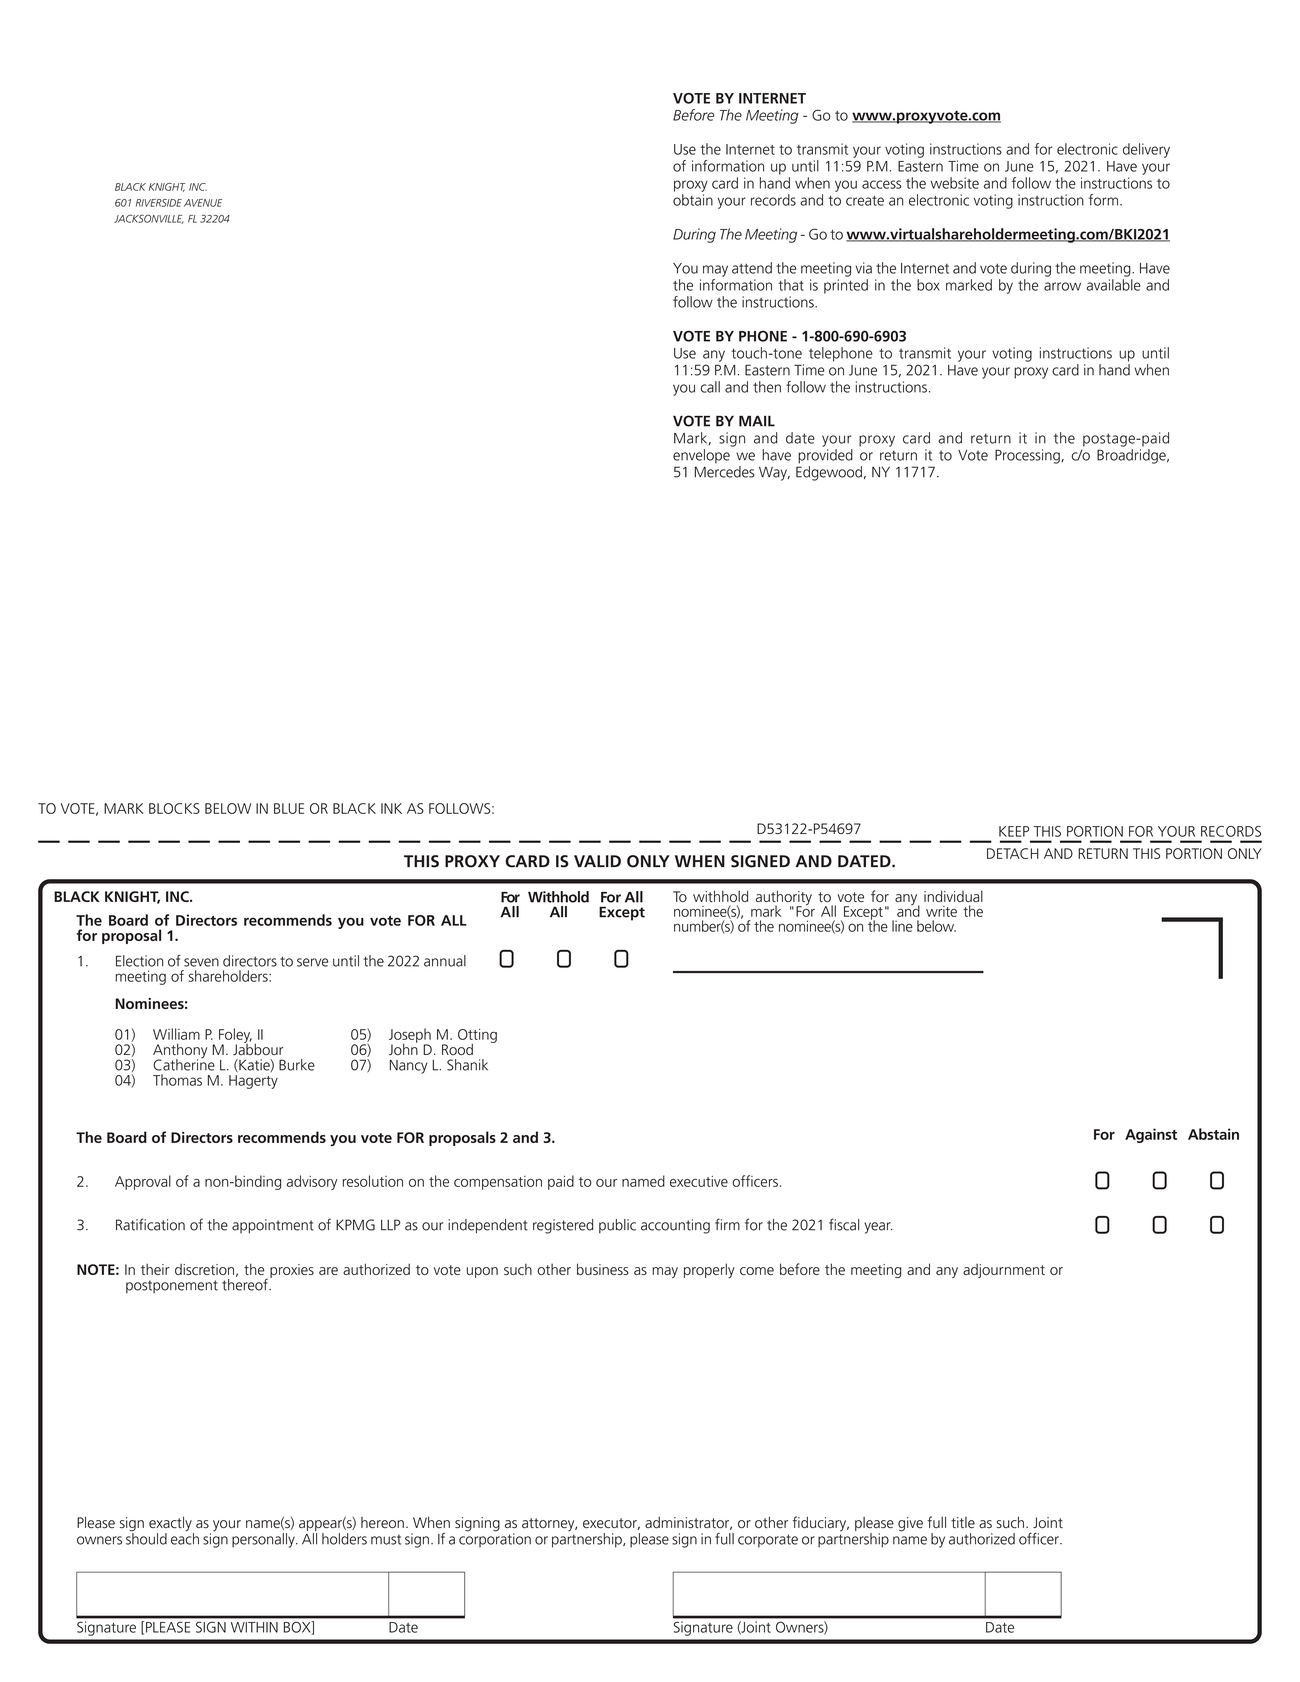 New Microsoft Word Document_bkipage2021 proxy proxy card_page001.jpg